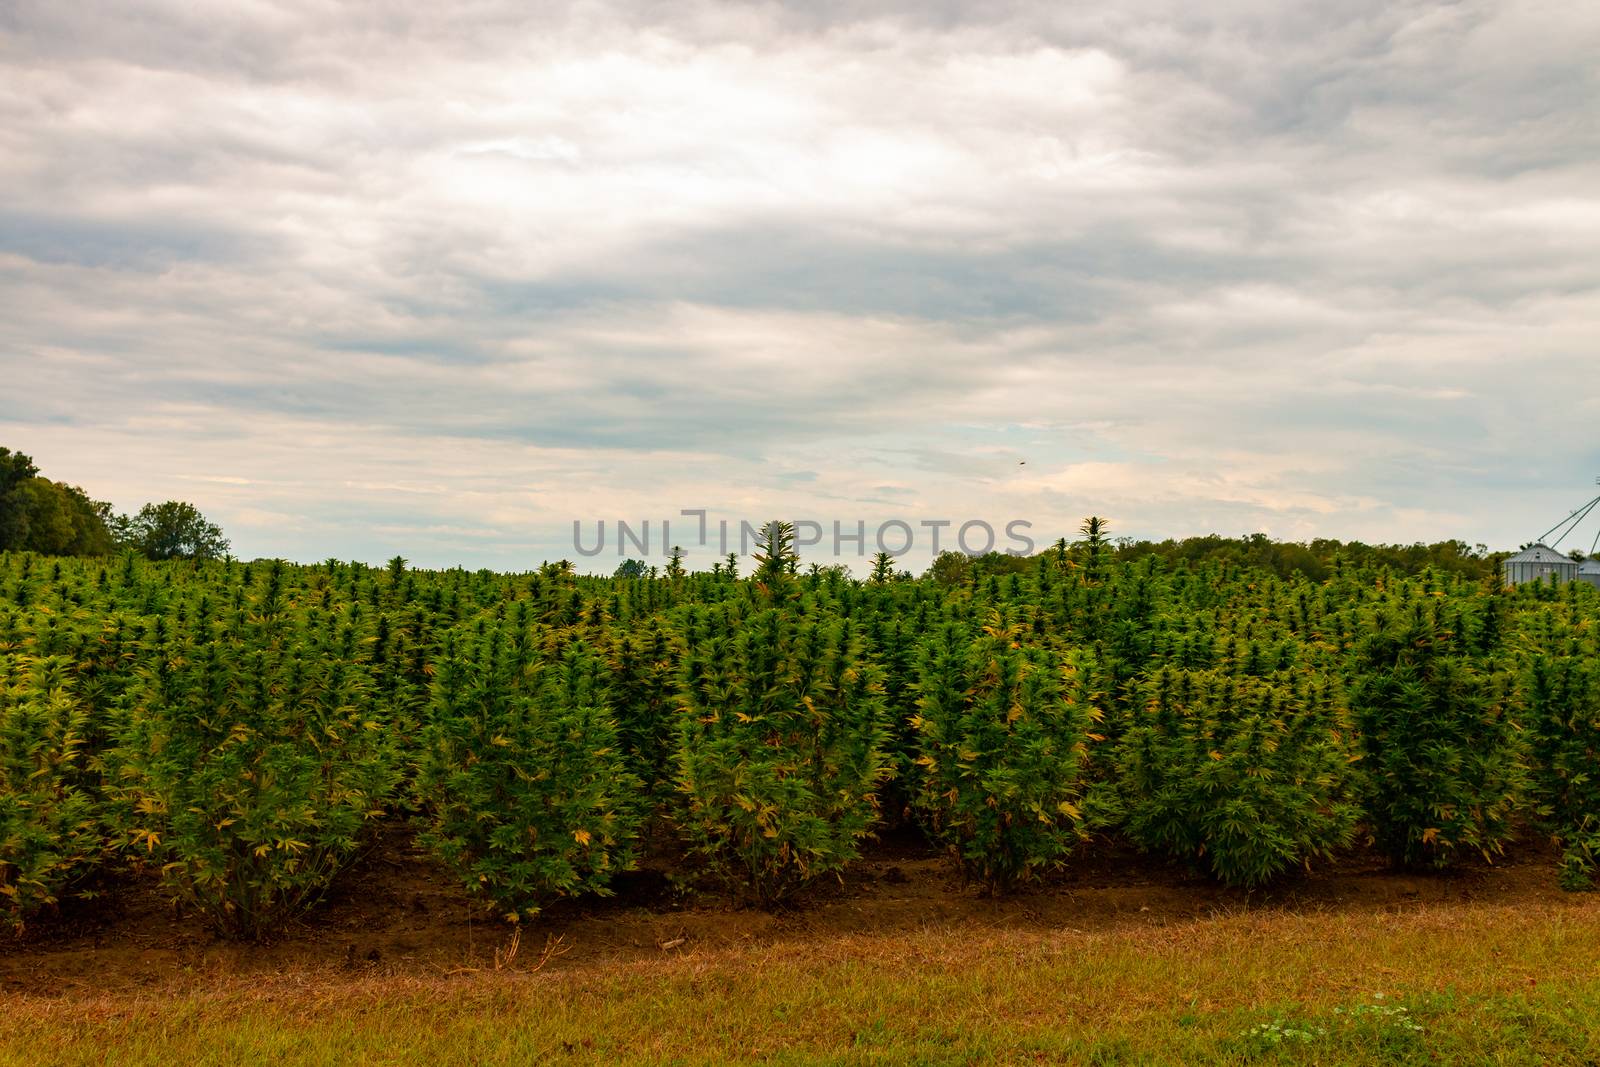 hemp farm in Ontario Canada. Marijuana was recently legalized.